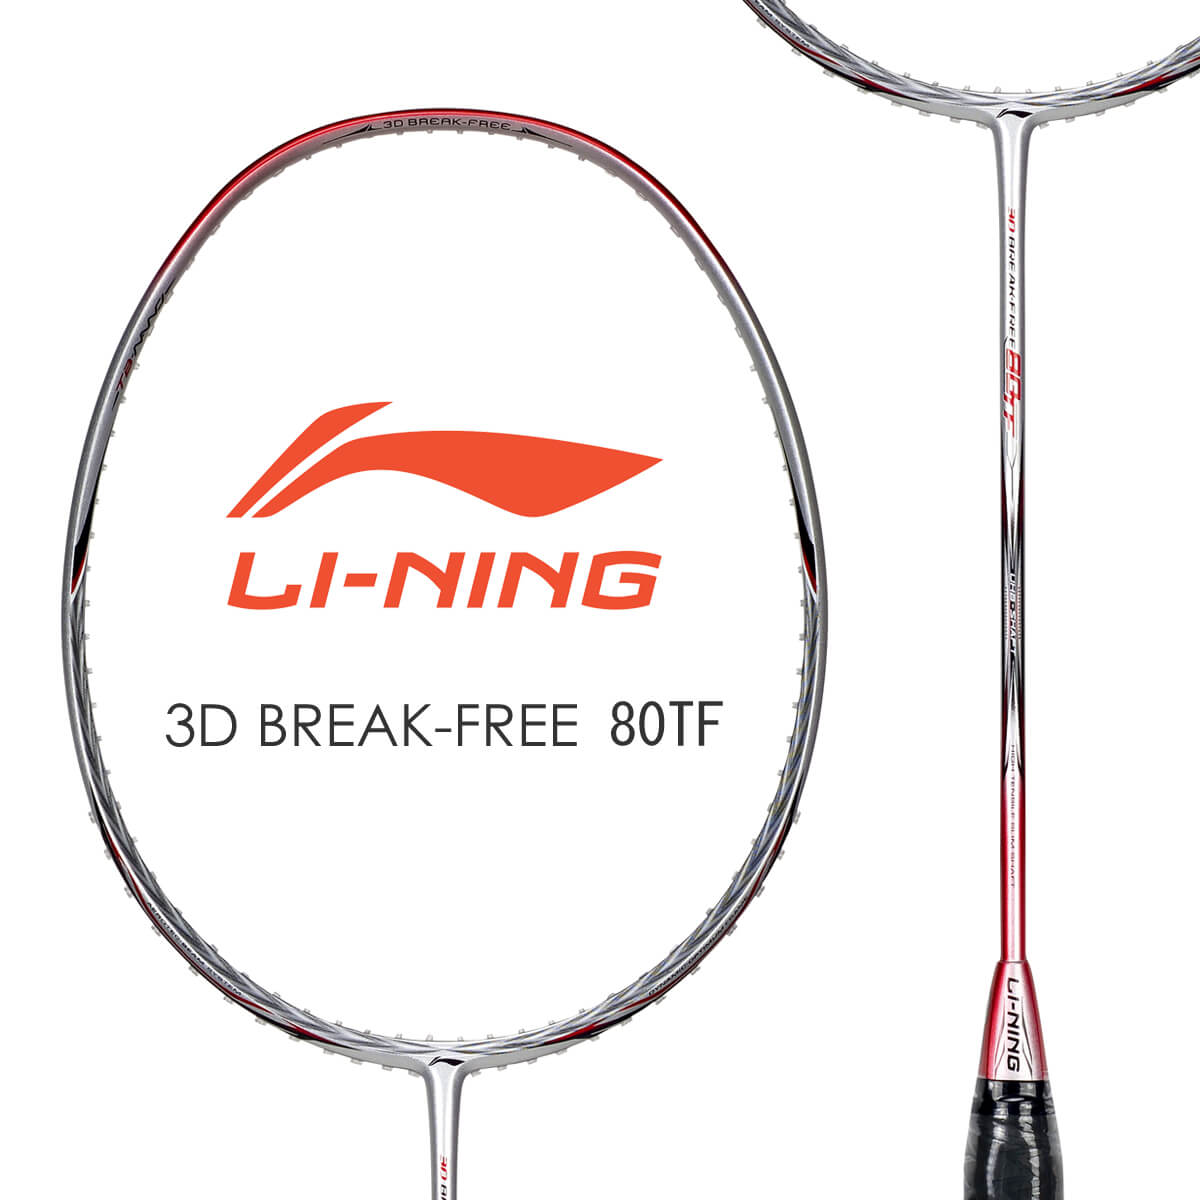 LI-NING 3D BREAK-FREE 80TF(AYPJ008) バドミントンラケット リーニン【オススメガット&ガット張り工賃無料】 ラケット